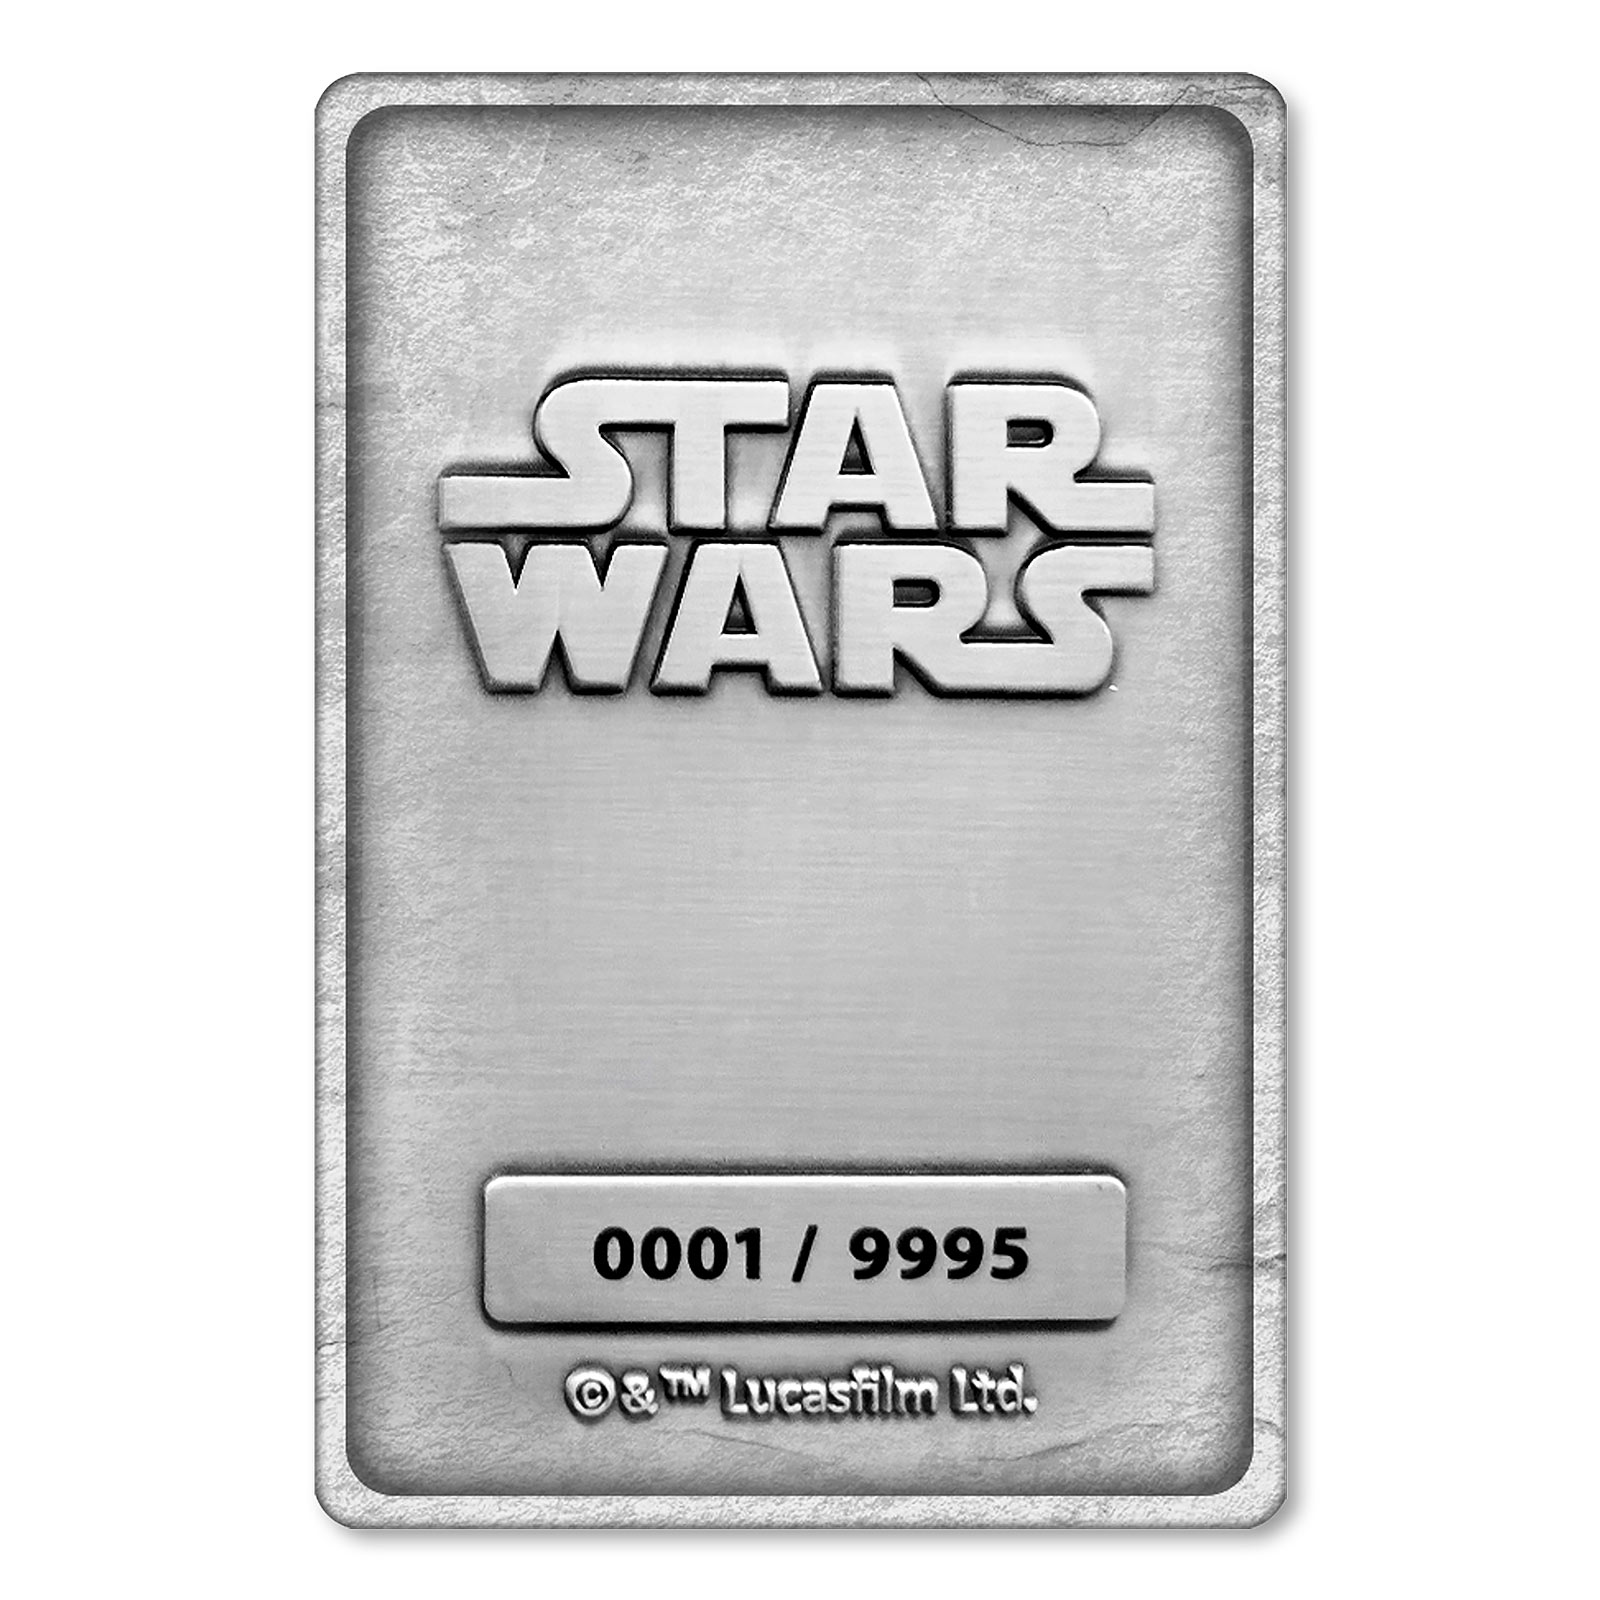 Star Wars - Han Solo in Carbonite Miniatur Sammlerreplik